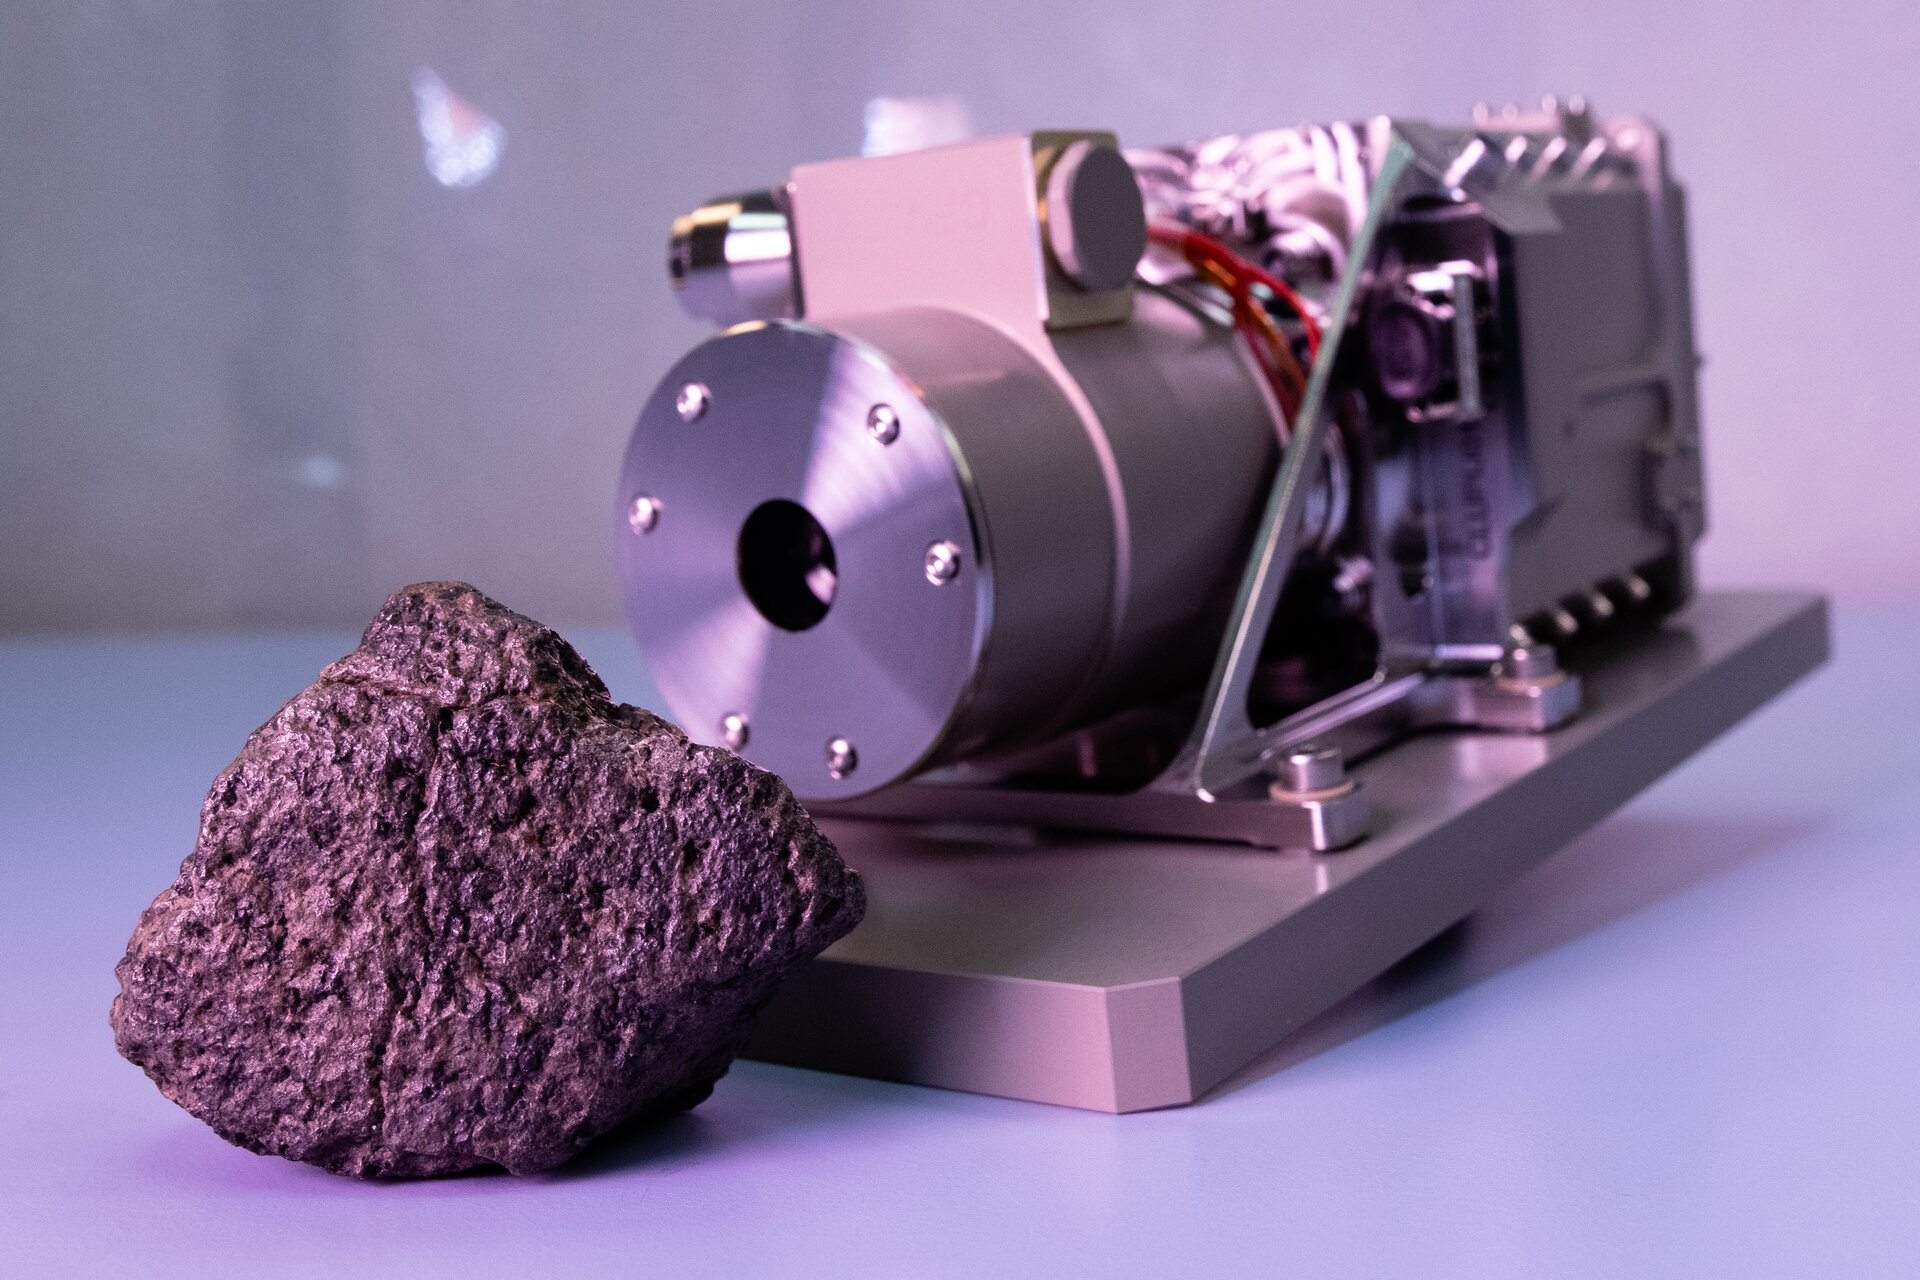 Martian meteorite on Earth calibrates camera bound for Mars